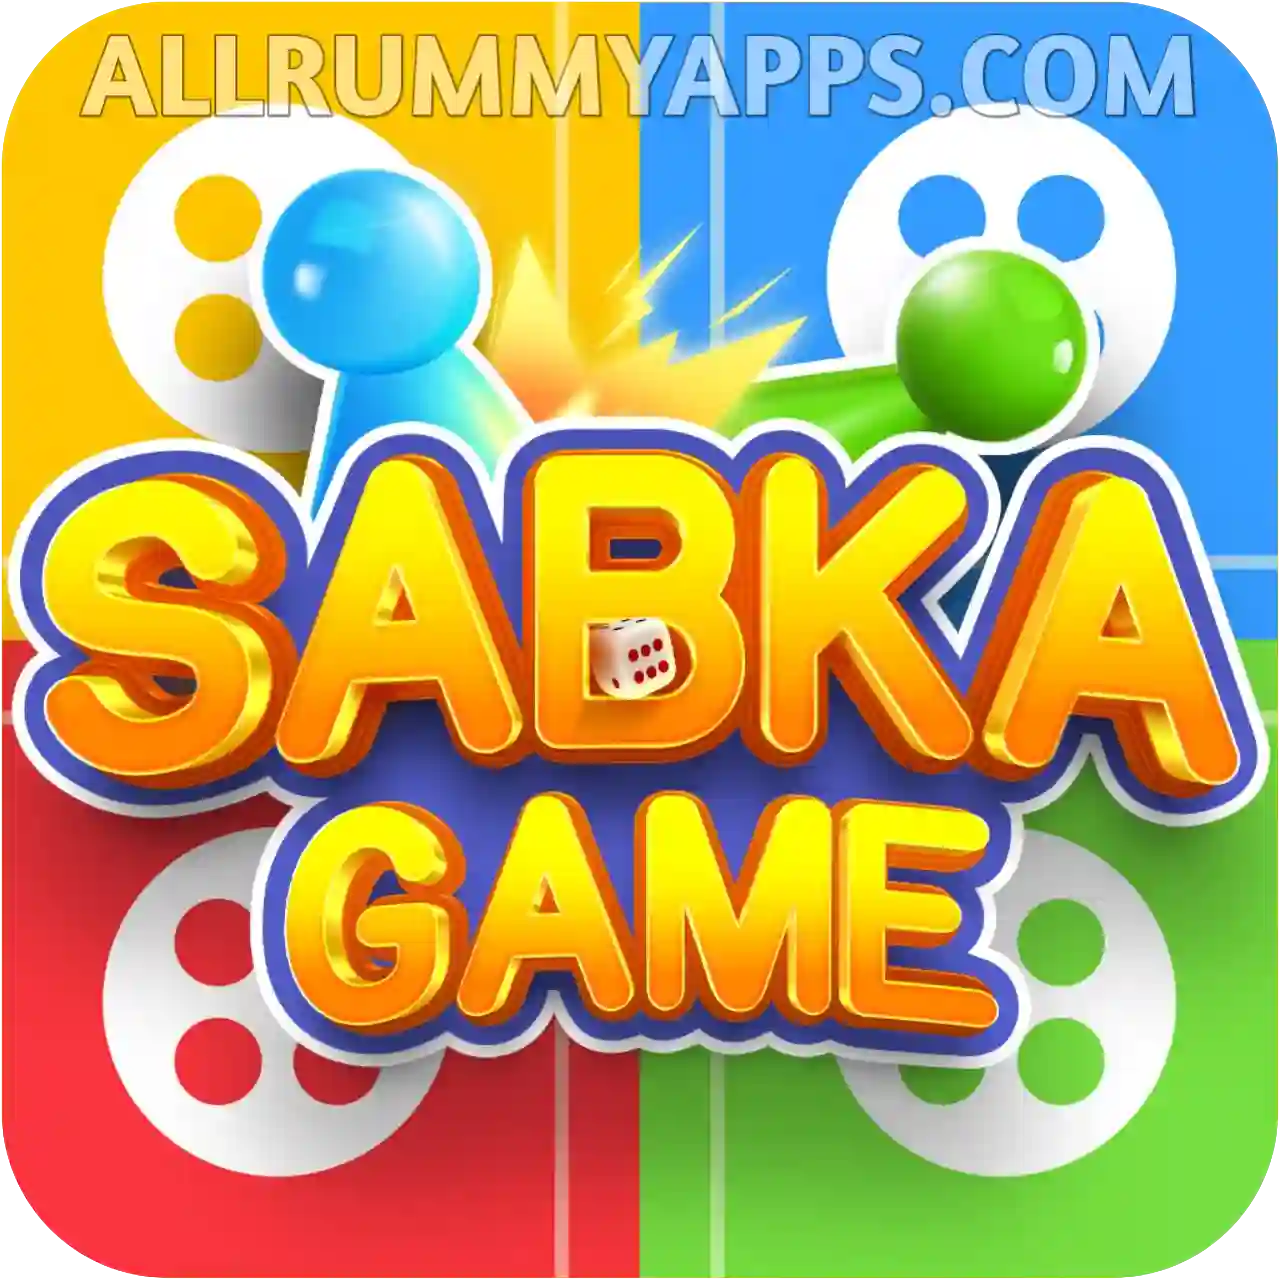 Sabka Game -  Rummy App